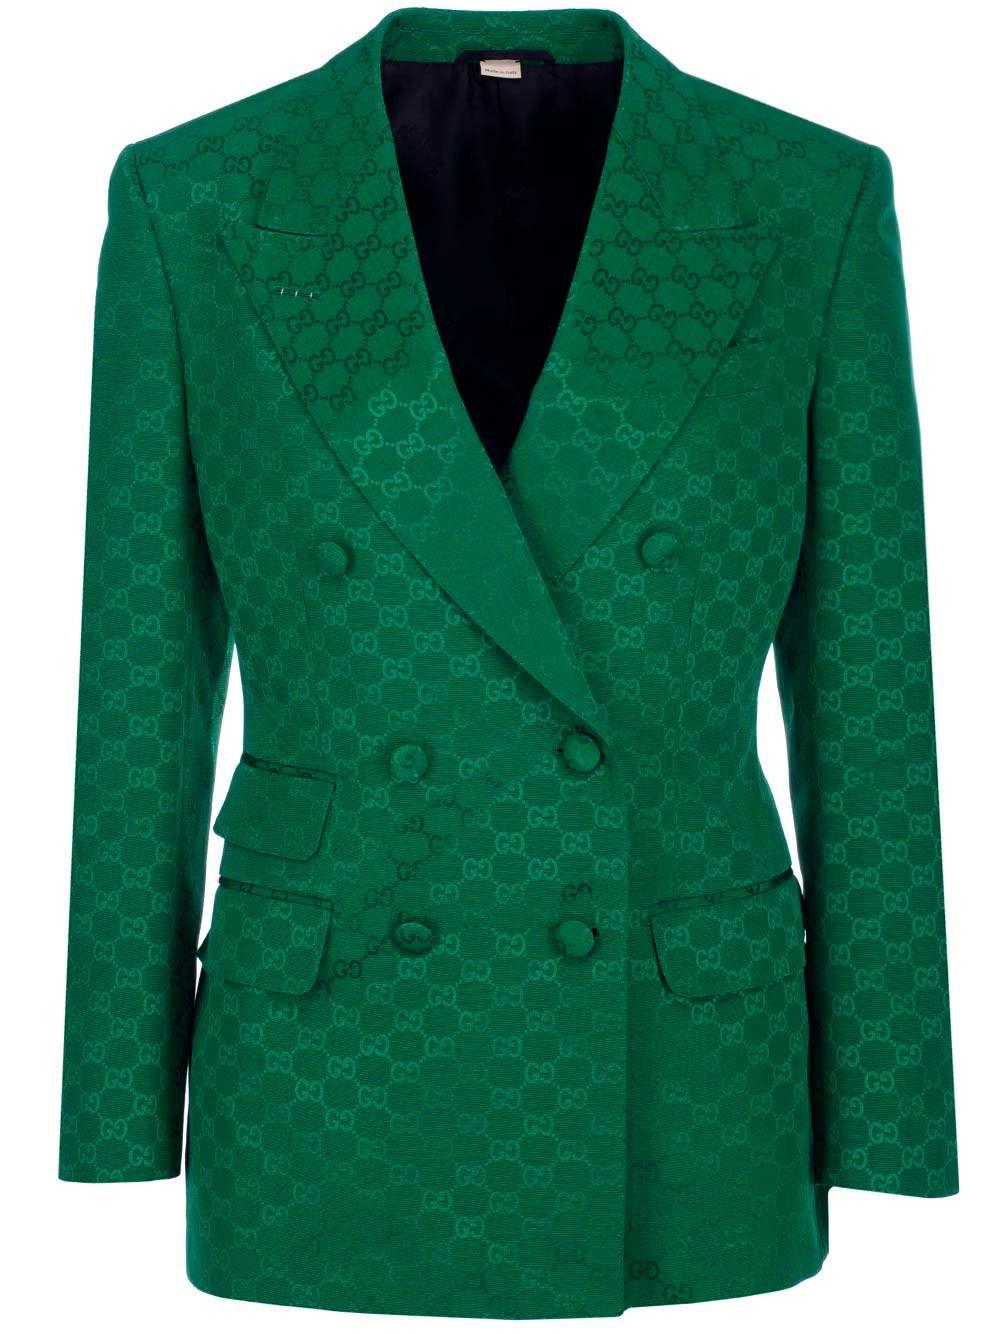 Gucci 38 Size Suits & Suit Separates for Women | eBay